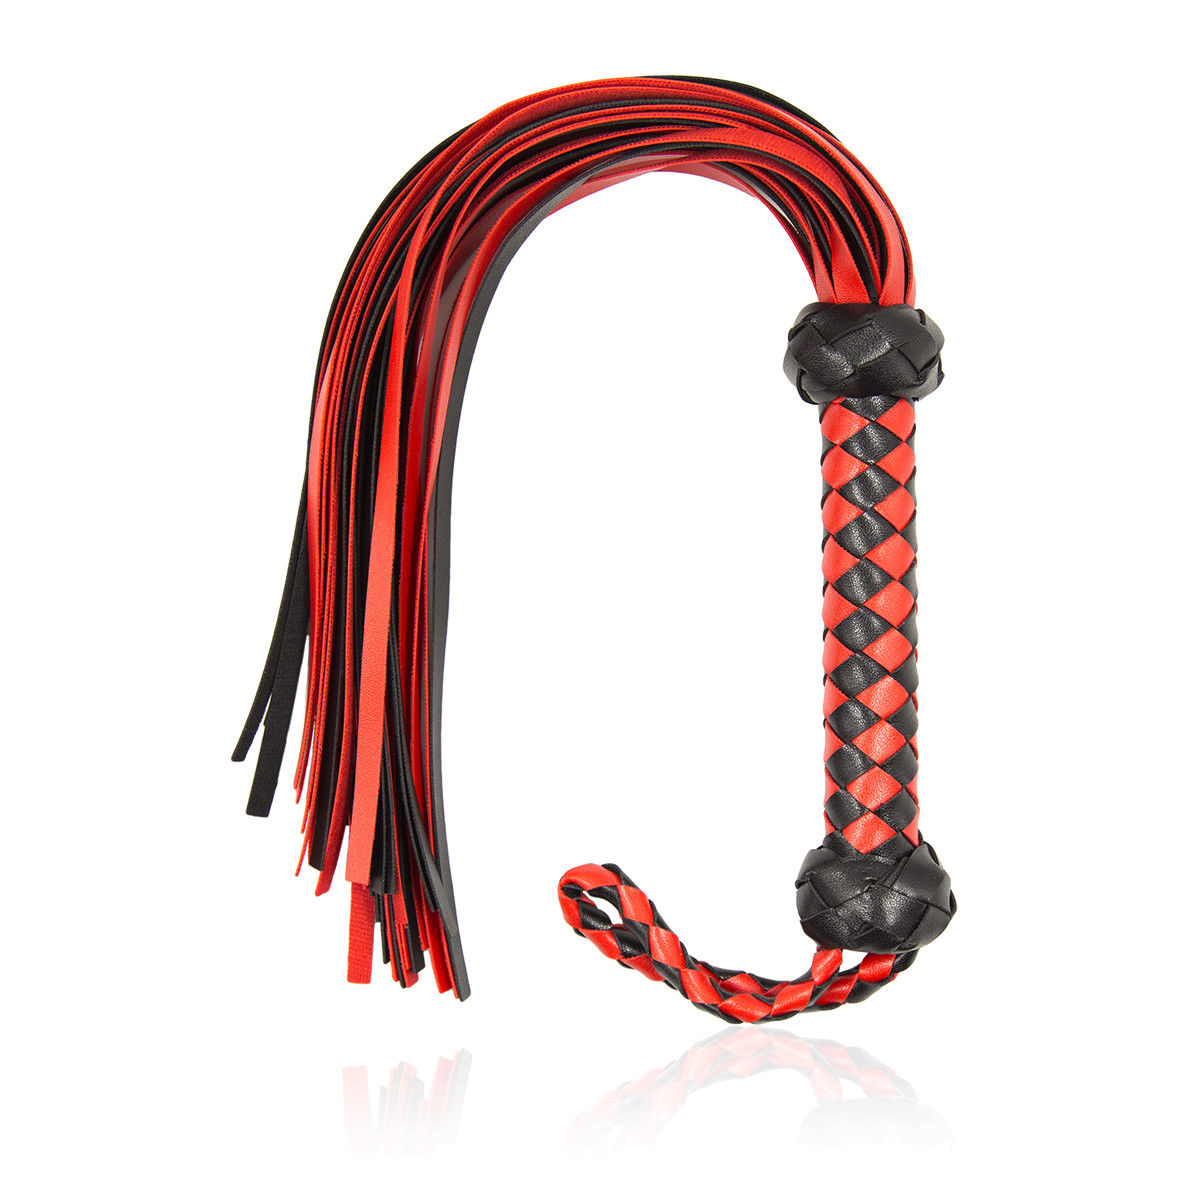 50cm Faux Leather Tassels Bondage Beginner Flogger - Red & Black